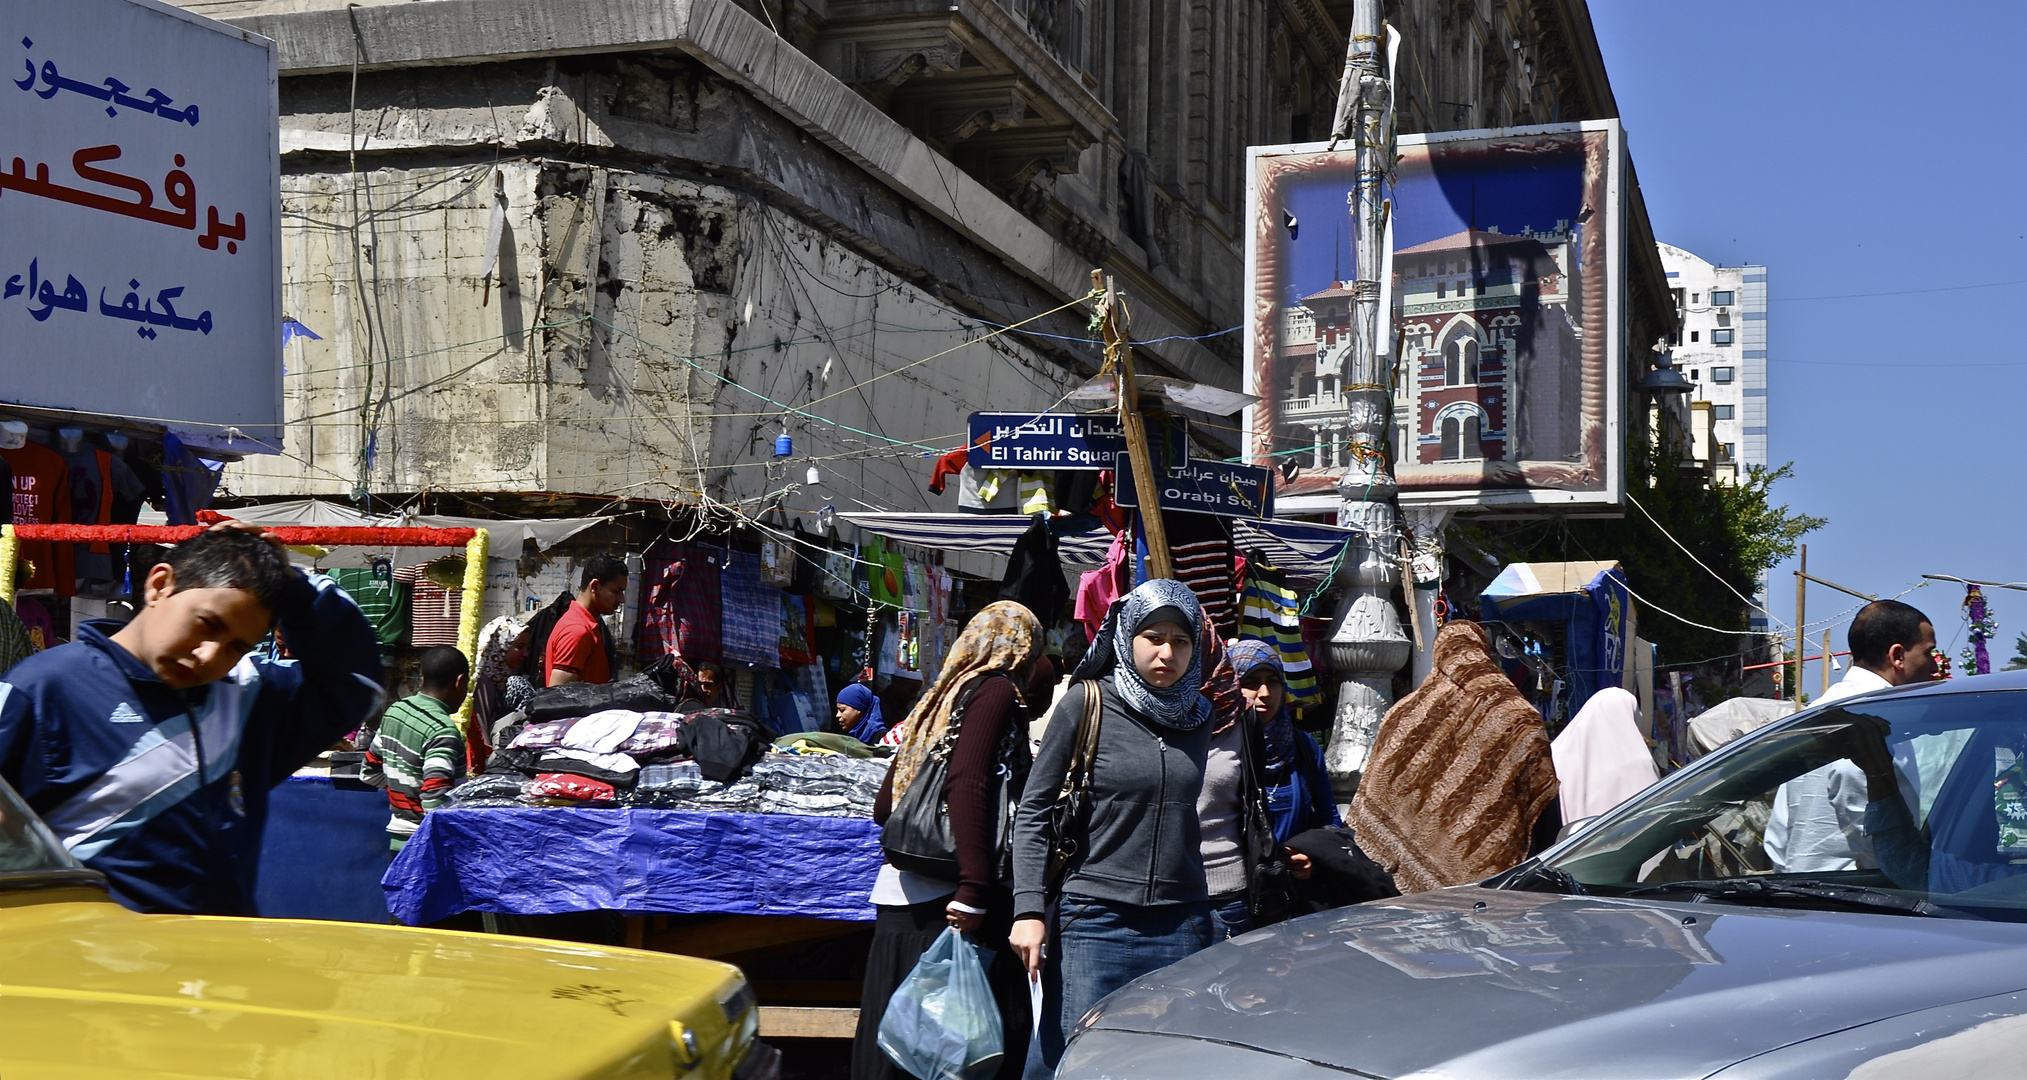 Tagesmarkt in Alexandria - Ecke El Tahrin Square / Ordi Souk